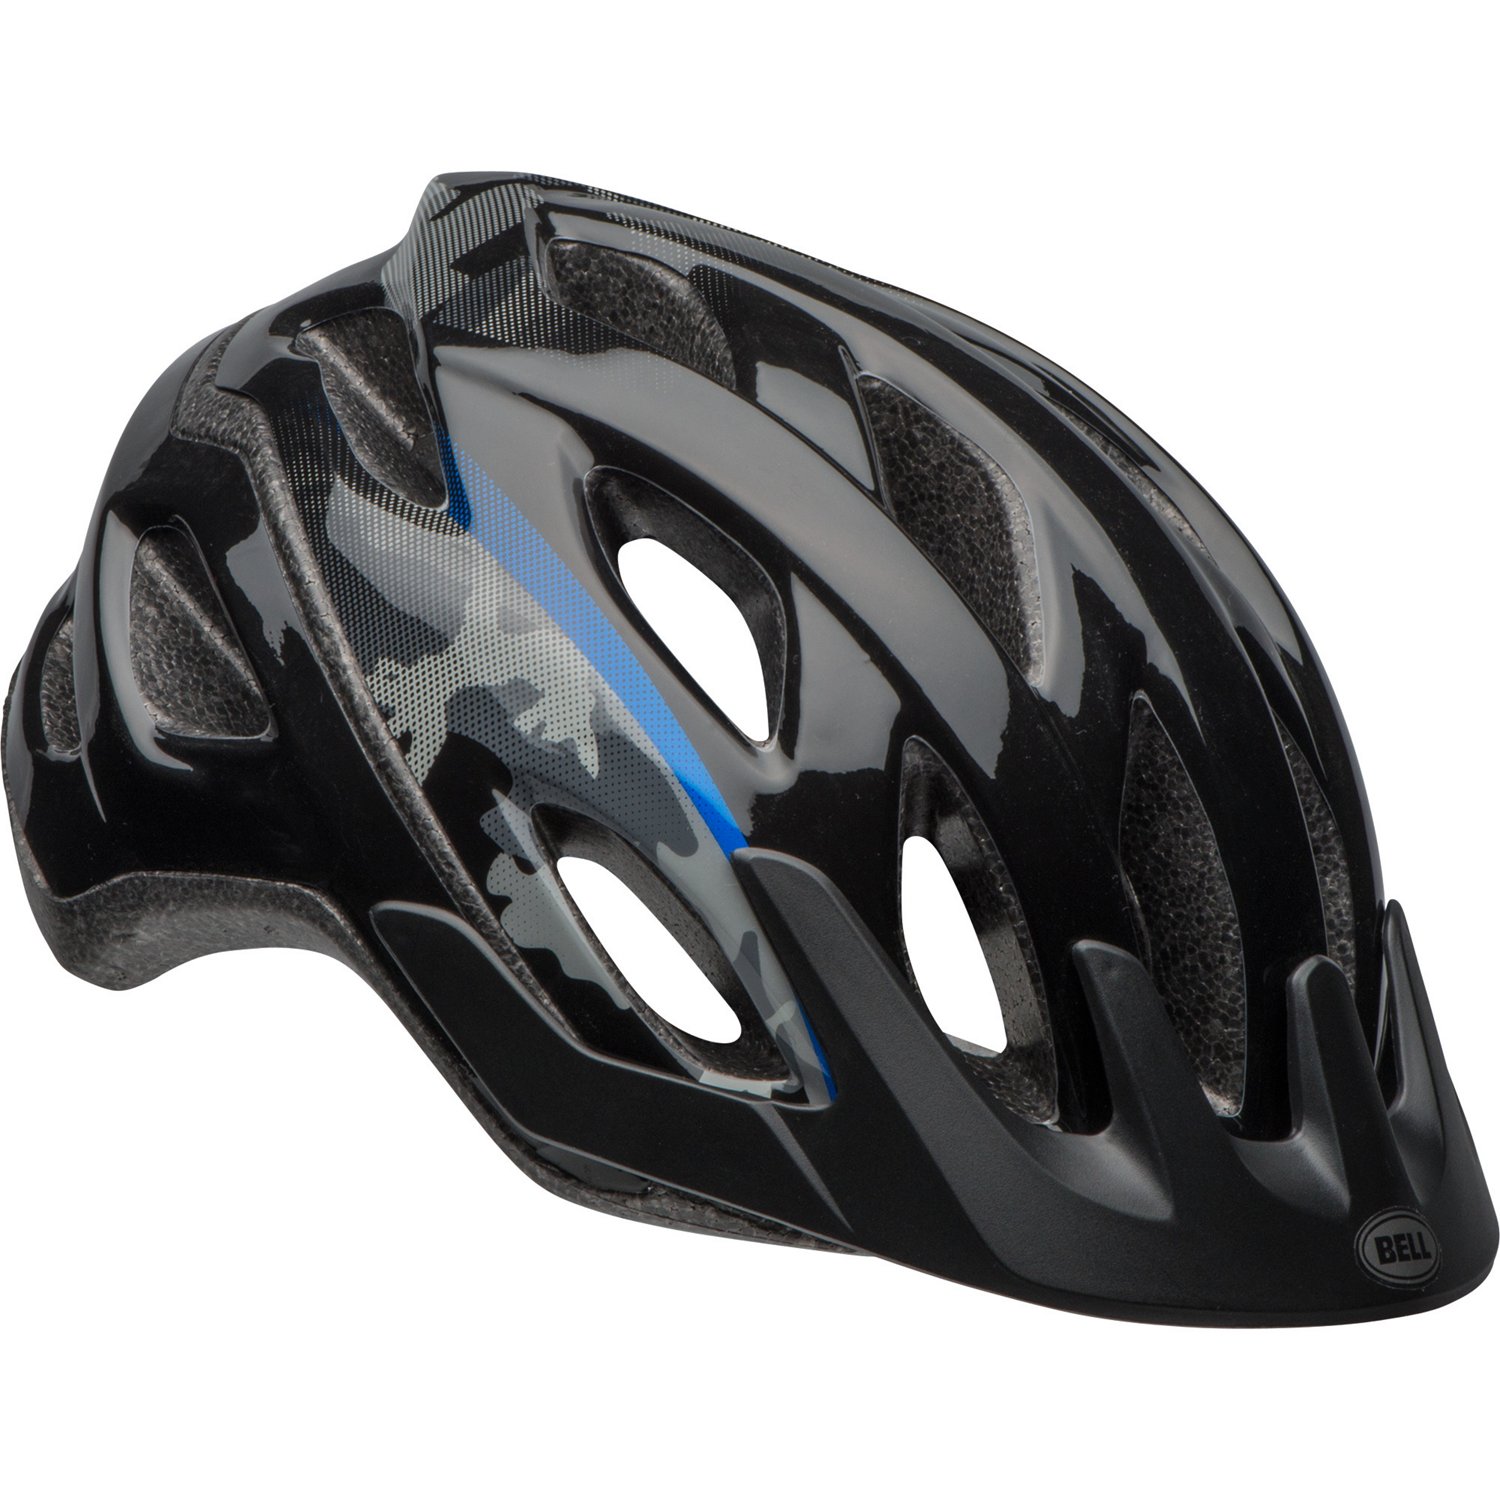 Adult Bike Helmet Biking Headgear Women Baseball Shield Black Black Blue 